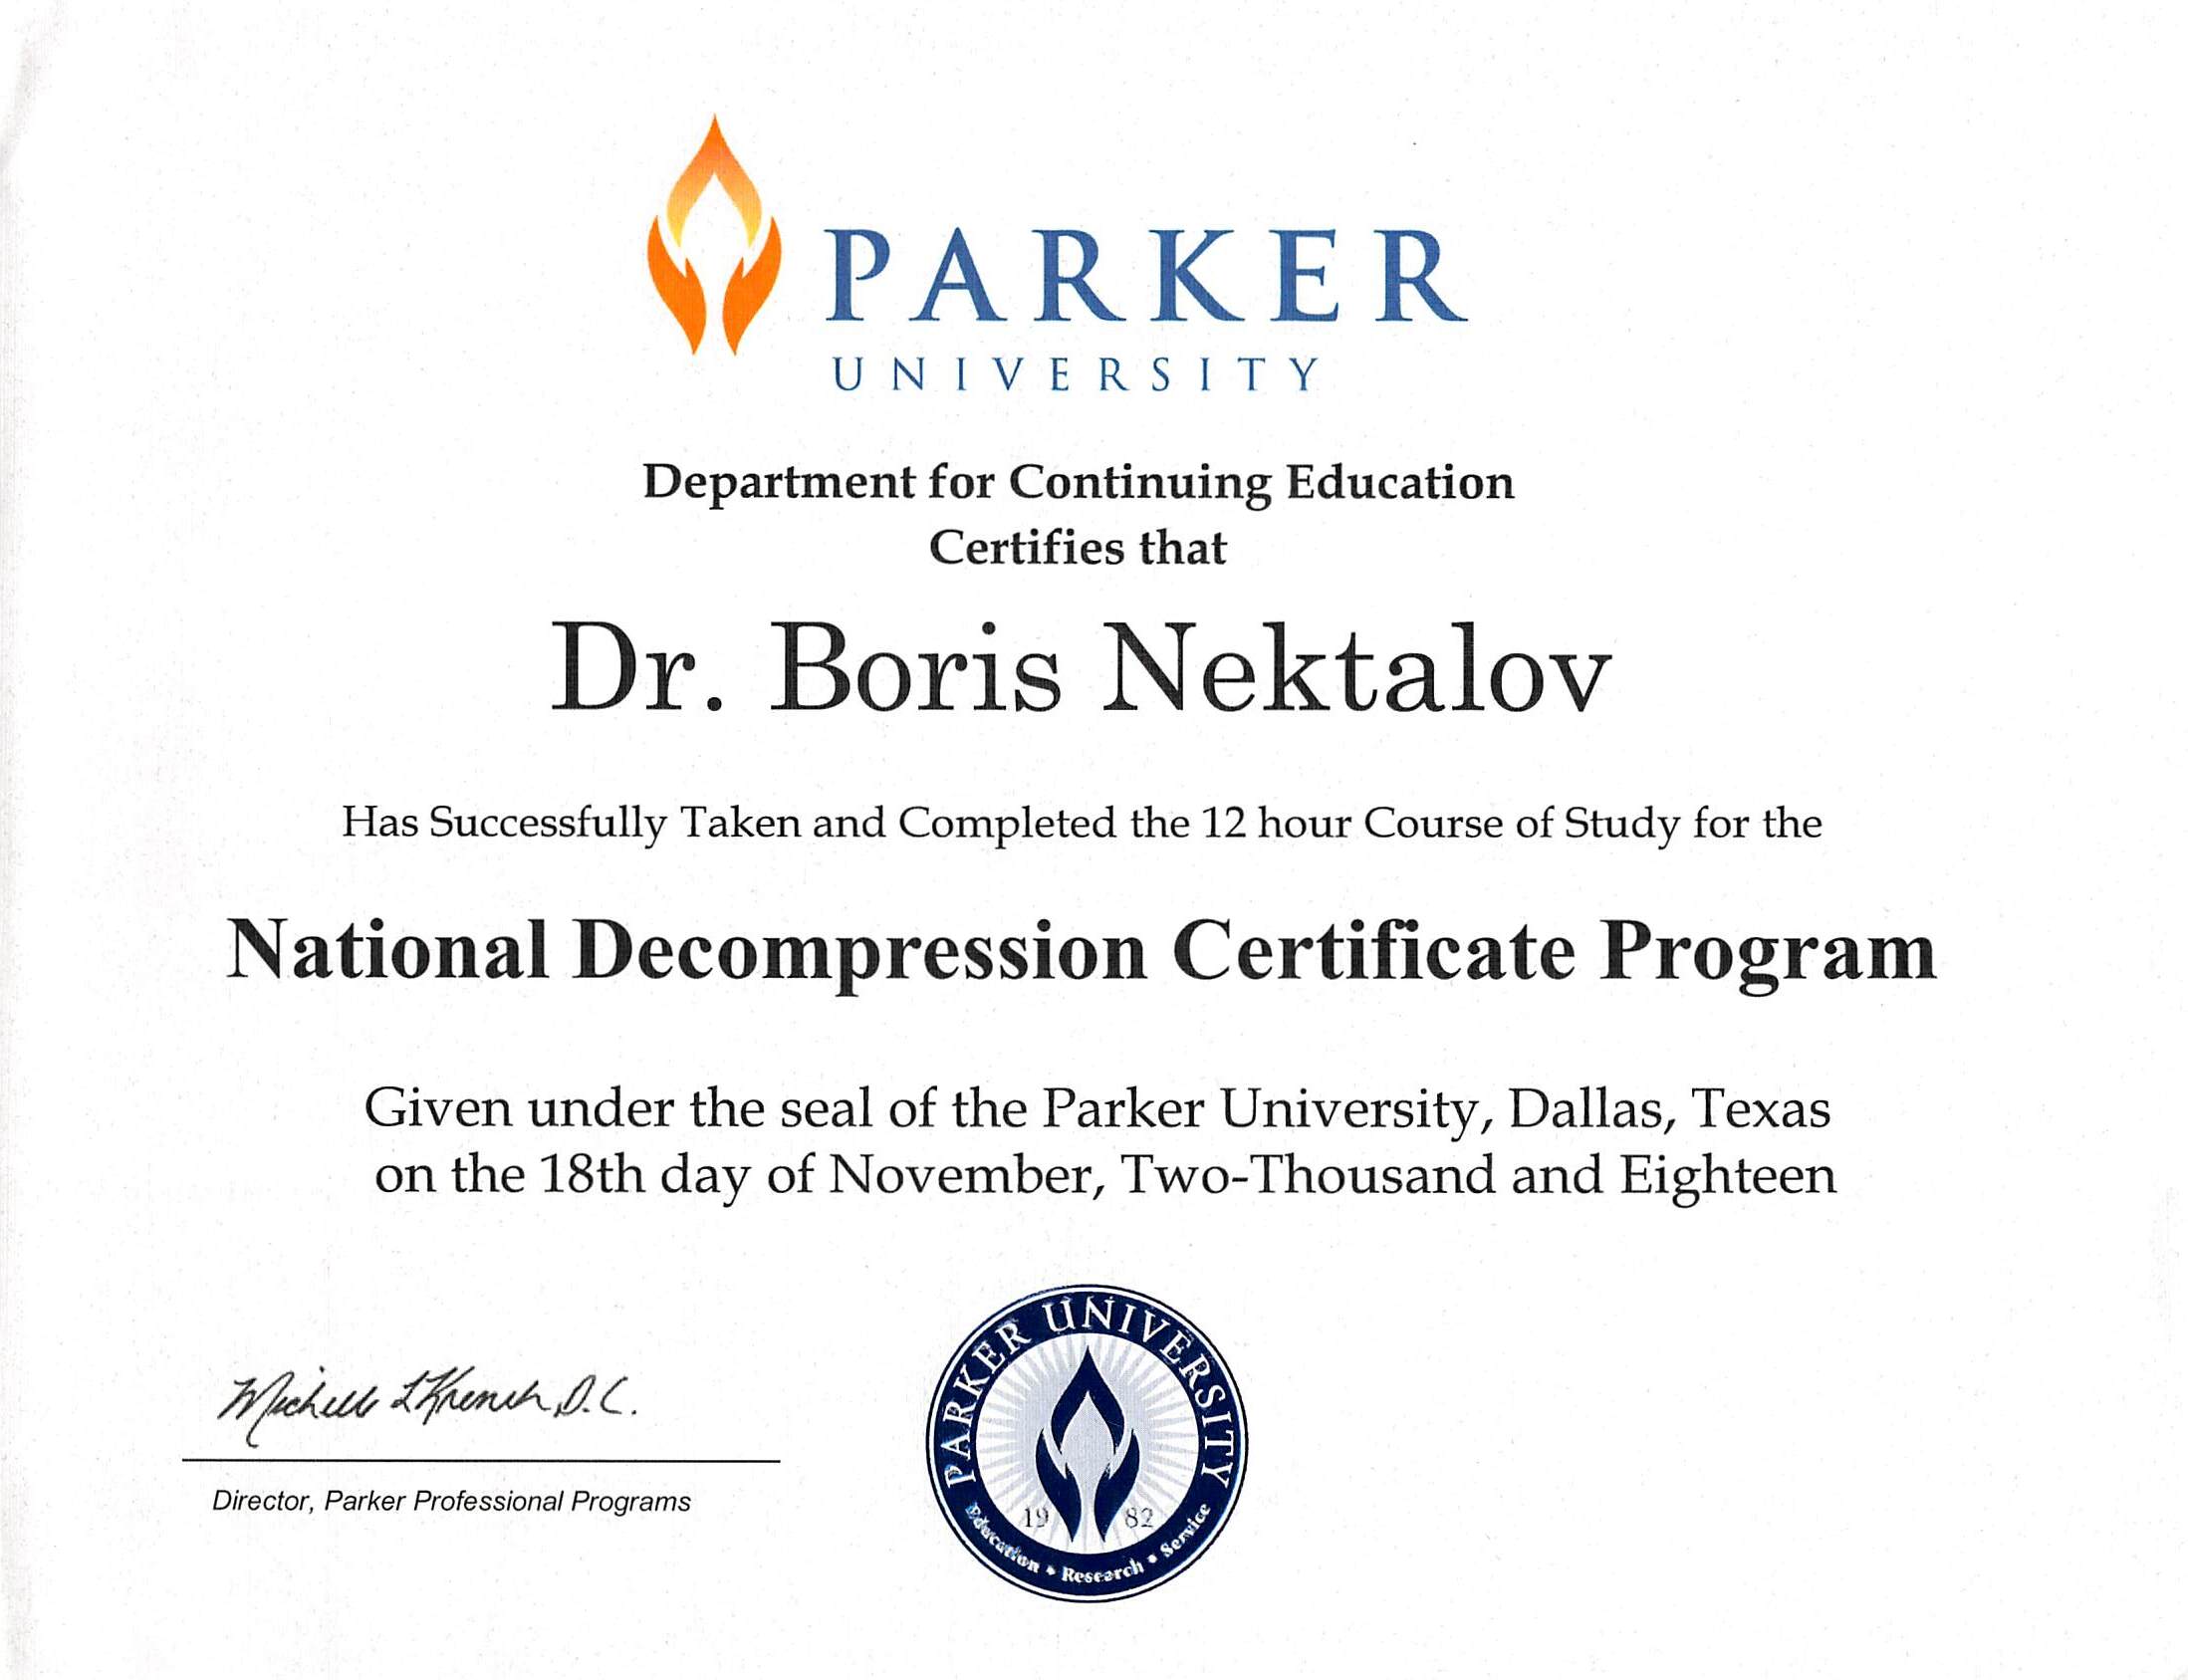 PARKER university certificate